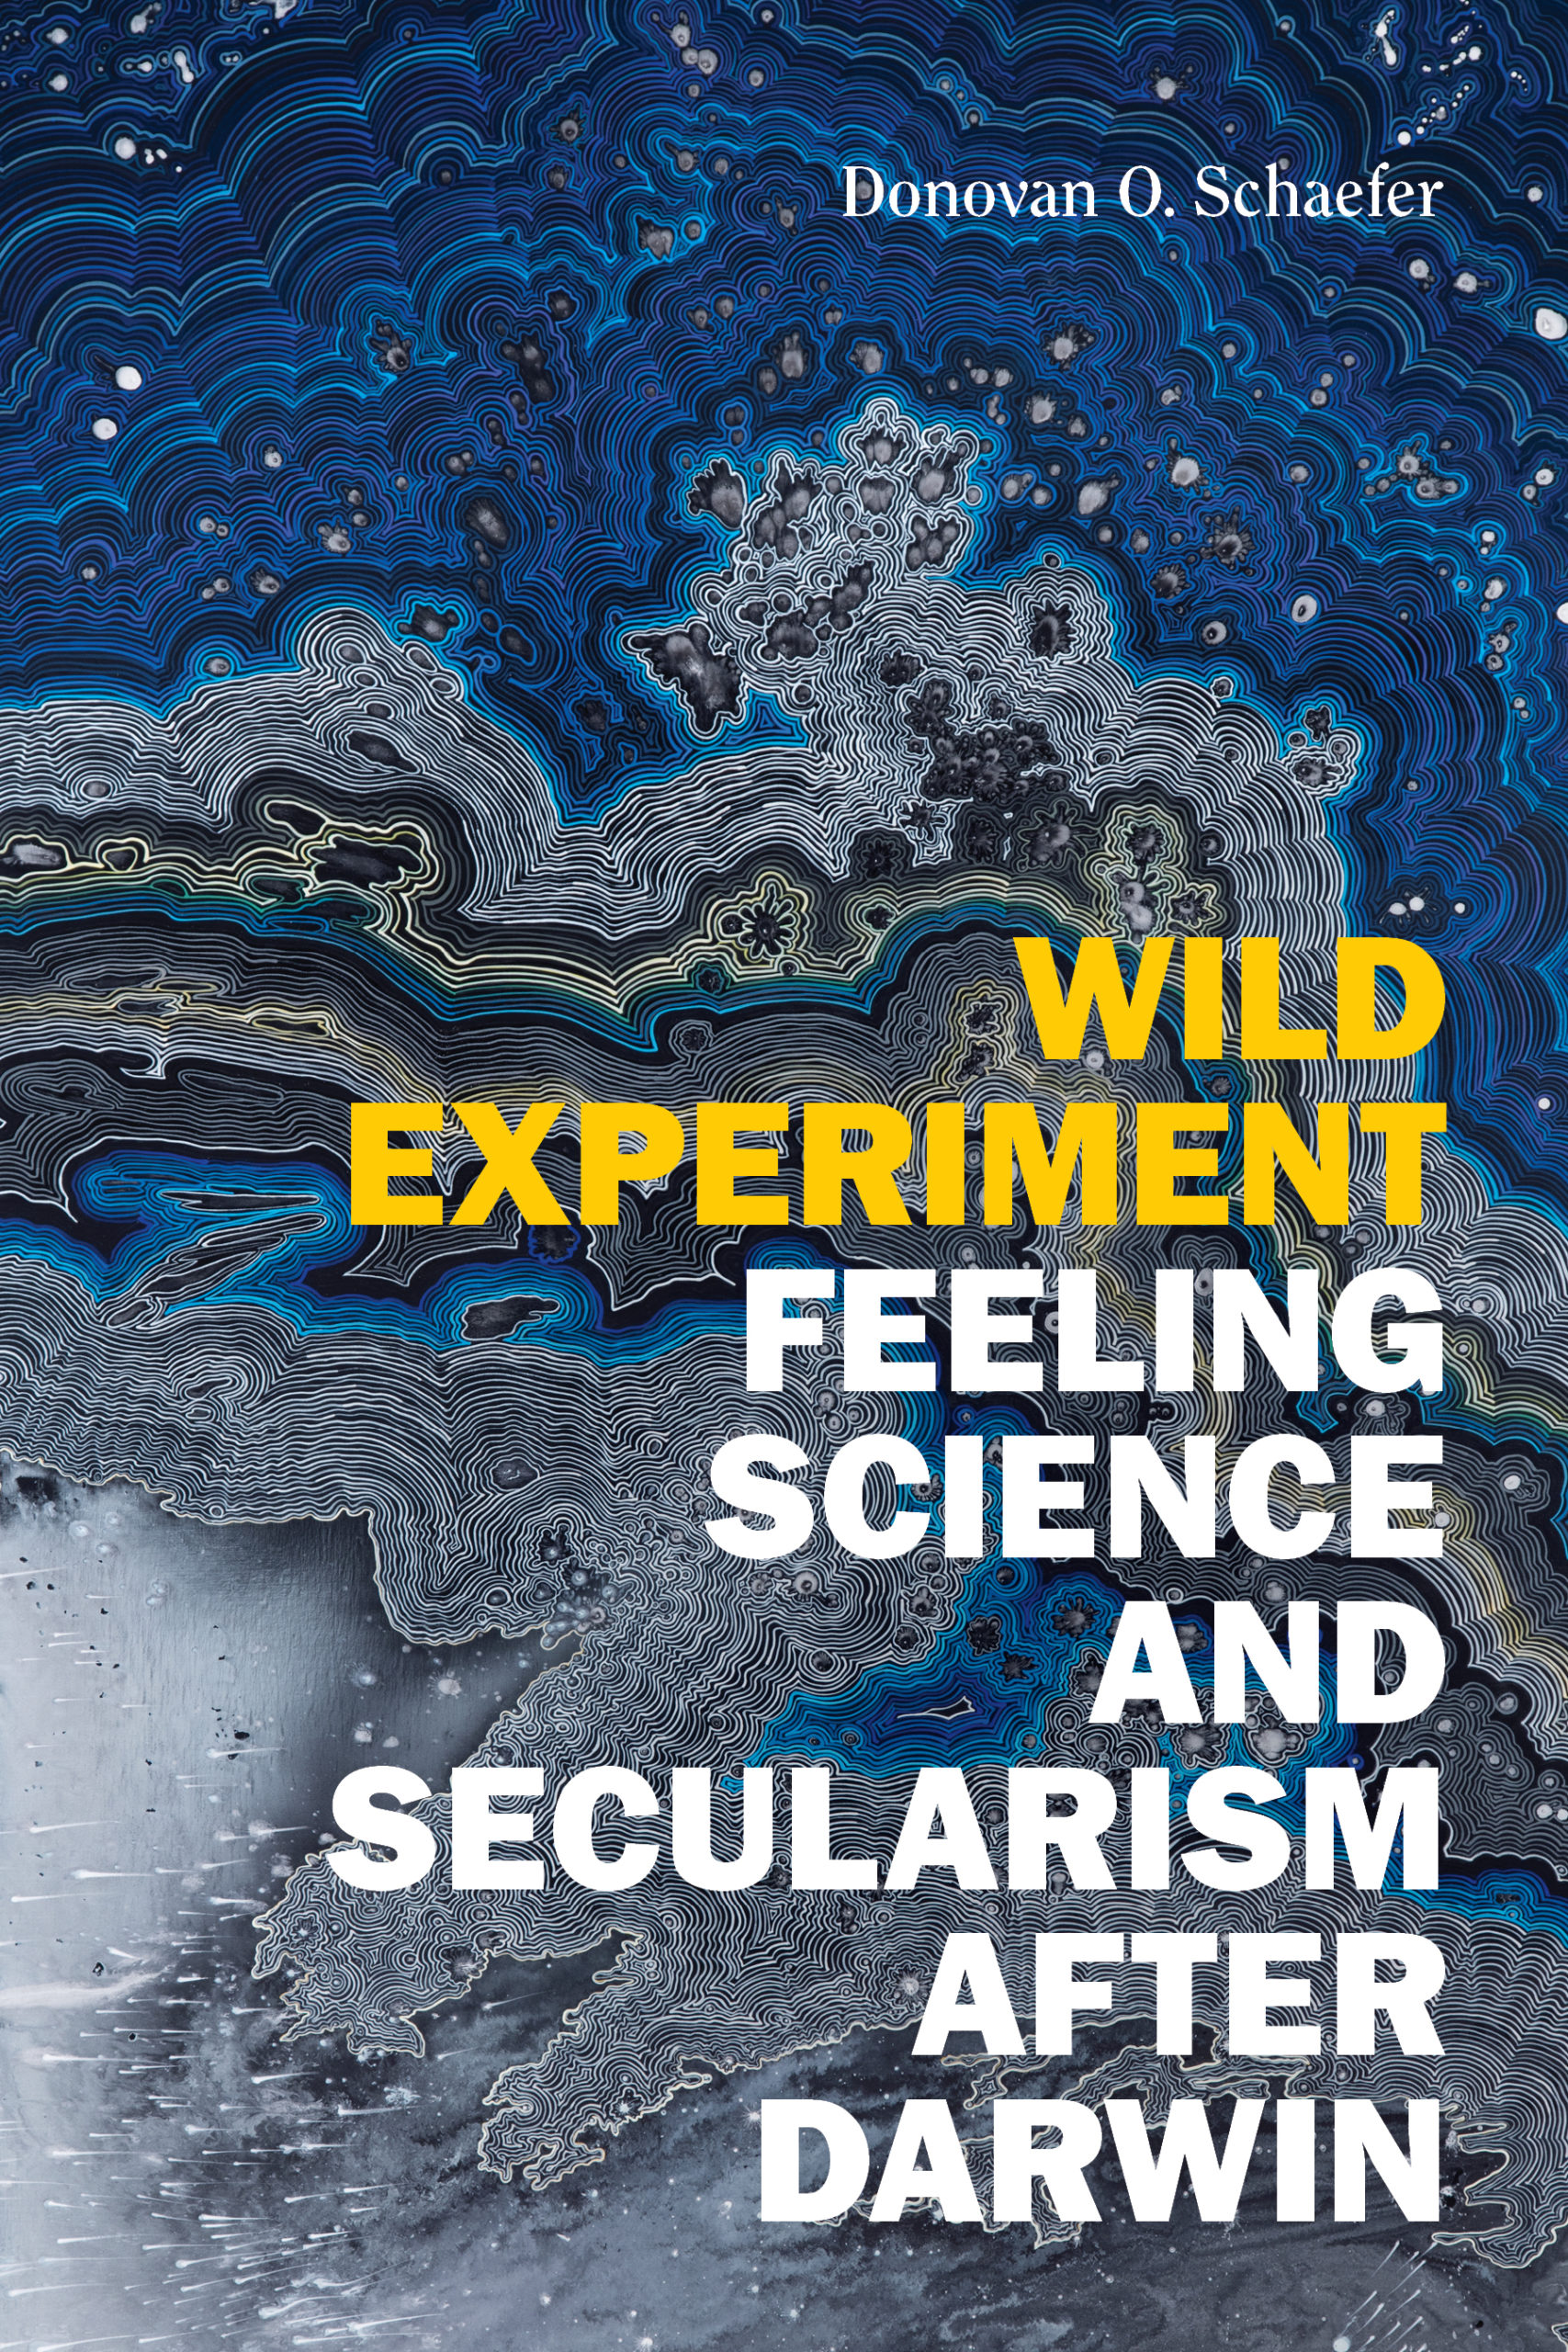 Wild Experiment (Duke University Press, 2022)